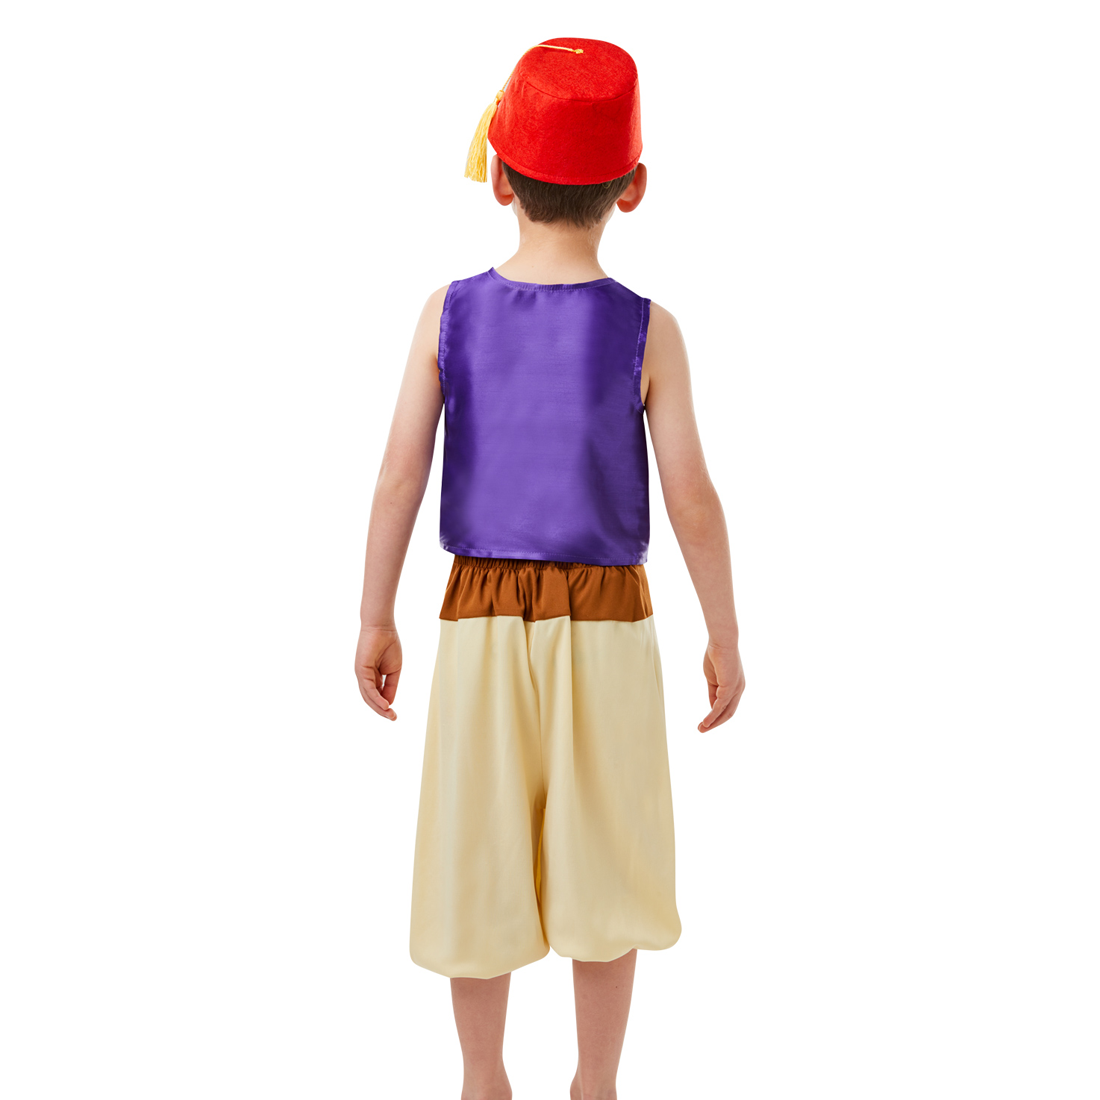 Child Disney Aladdin Deluxe Costume